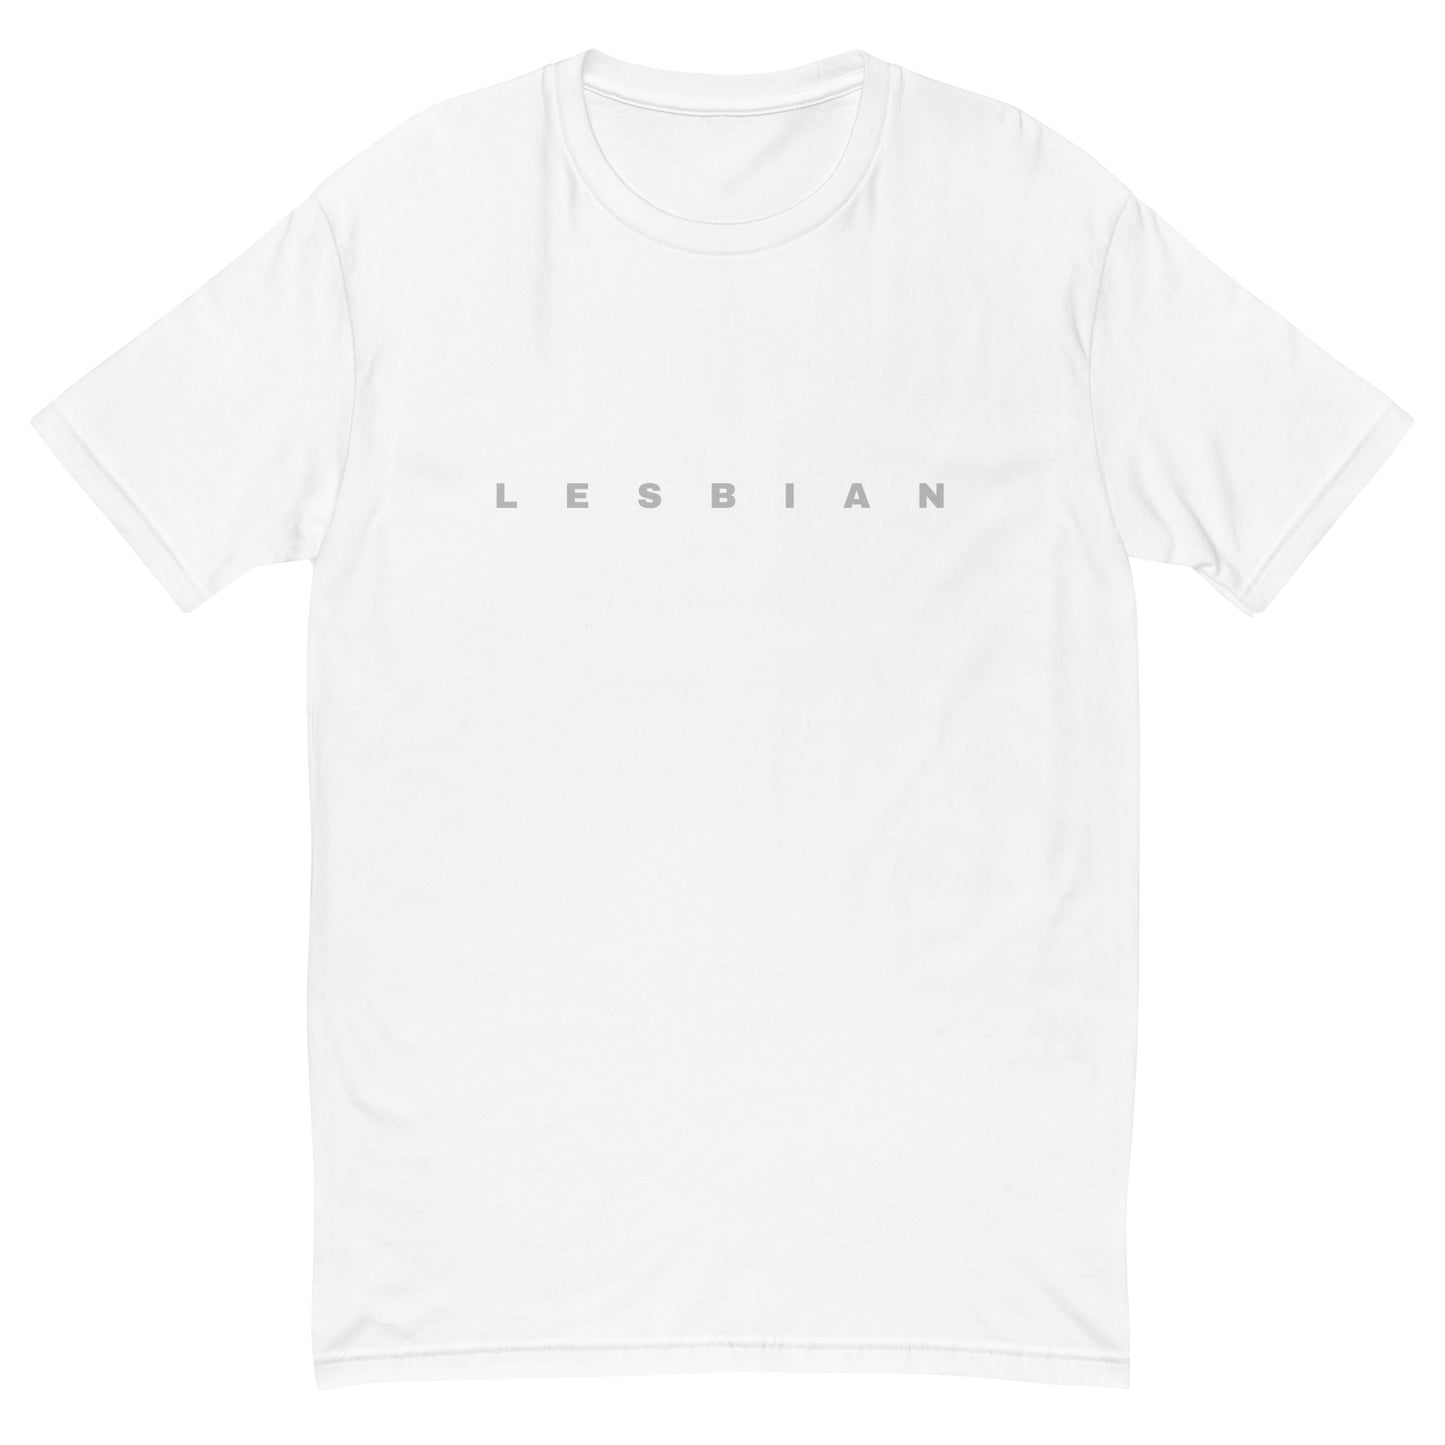 LESBIAN Short Sleeve T-shirt